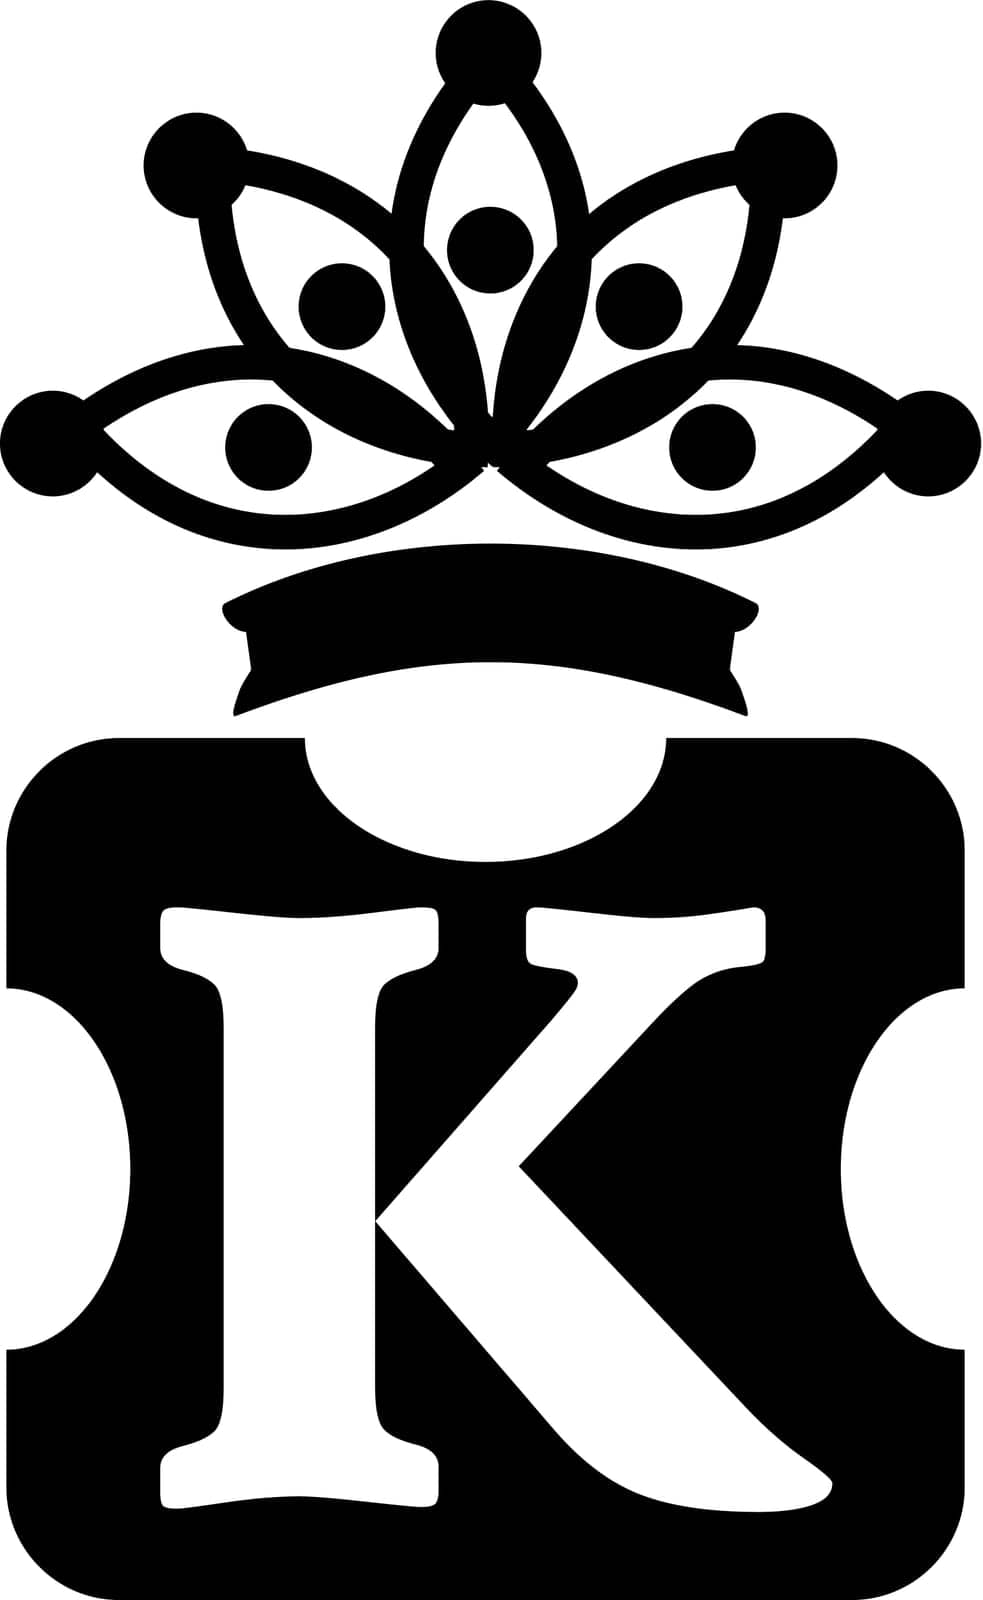 Letter K Crown by alluranet